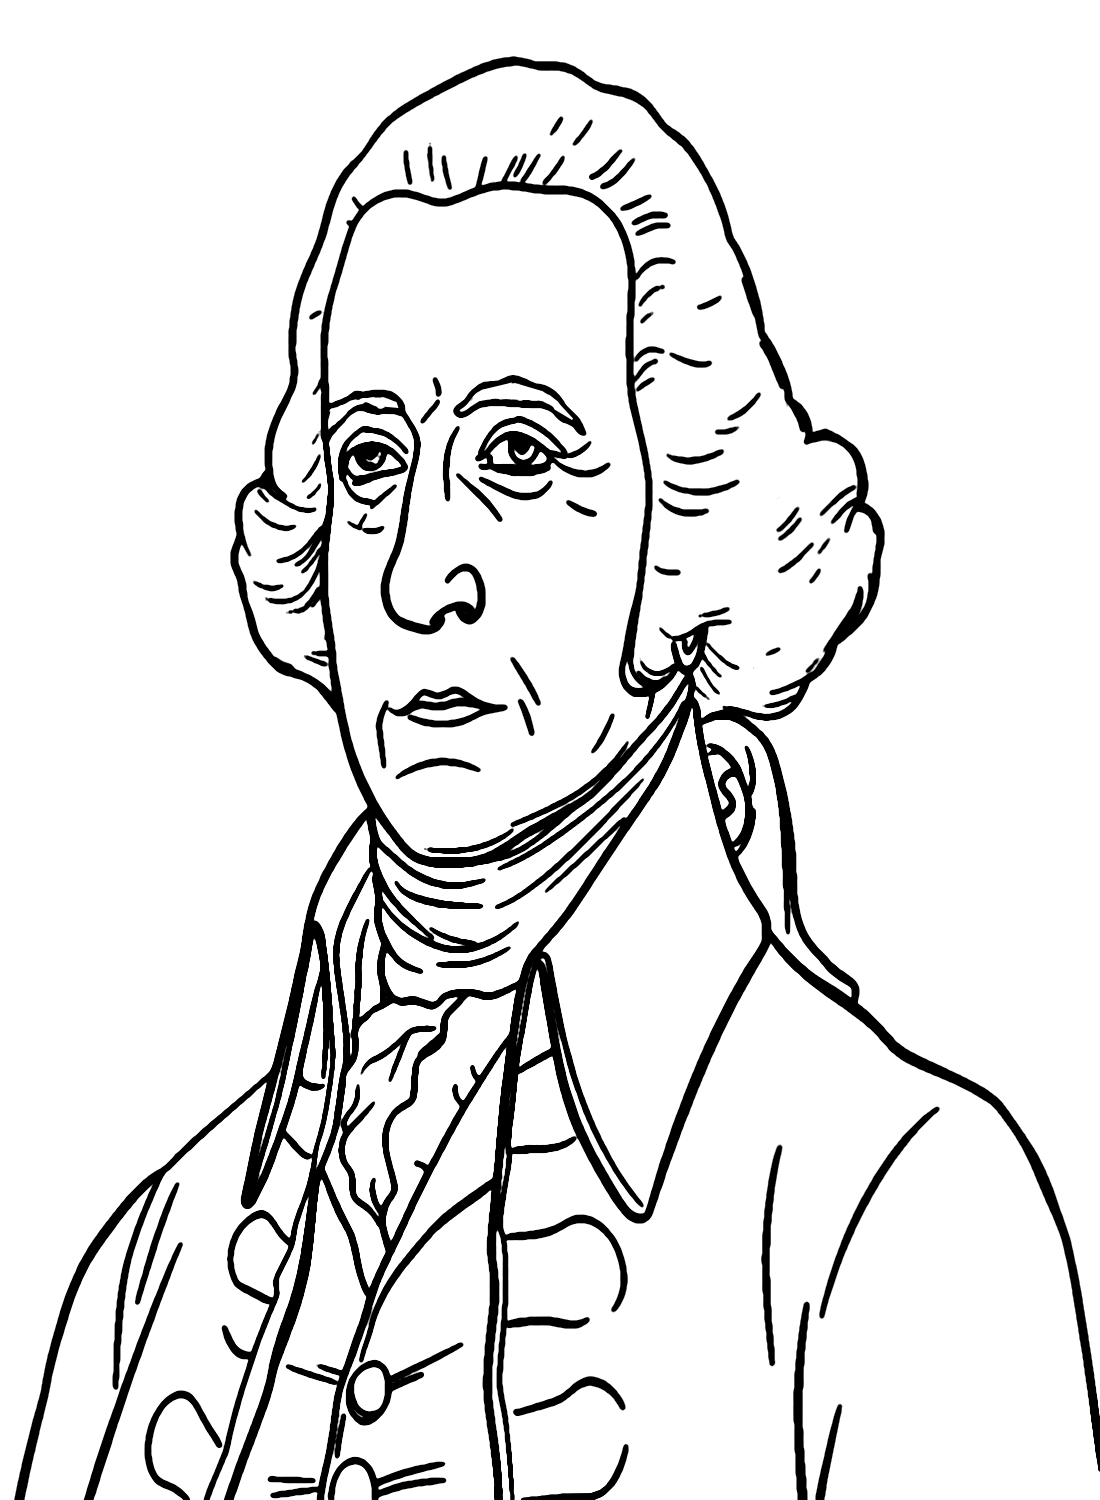 亚历山大·汉密尔顿 (Alexander Hamilton) 的可打印亚历山大·汉密尔顿 (Alexander Hamilton)